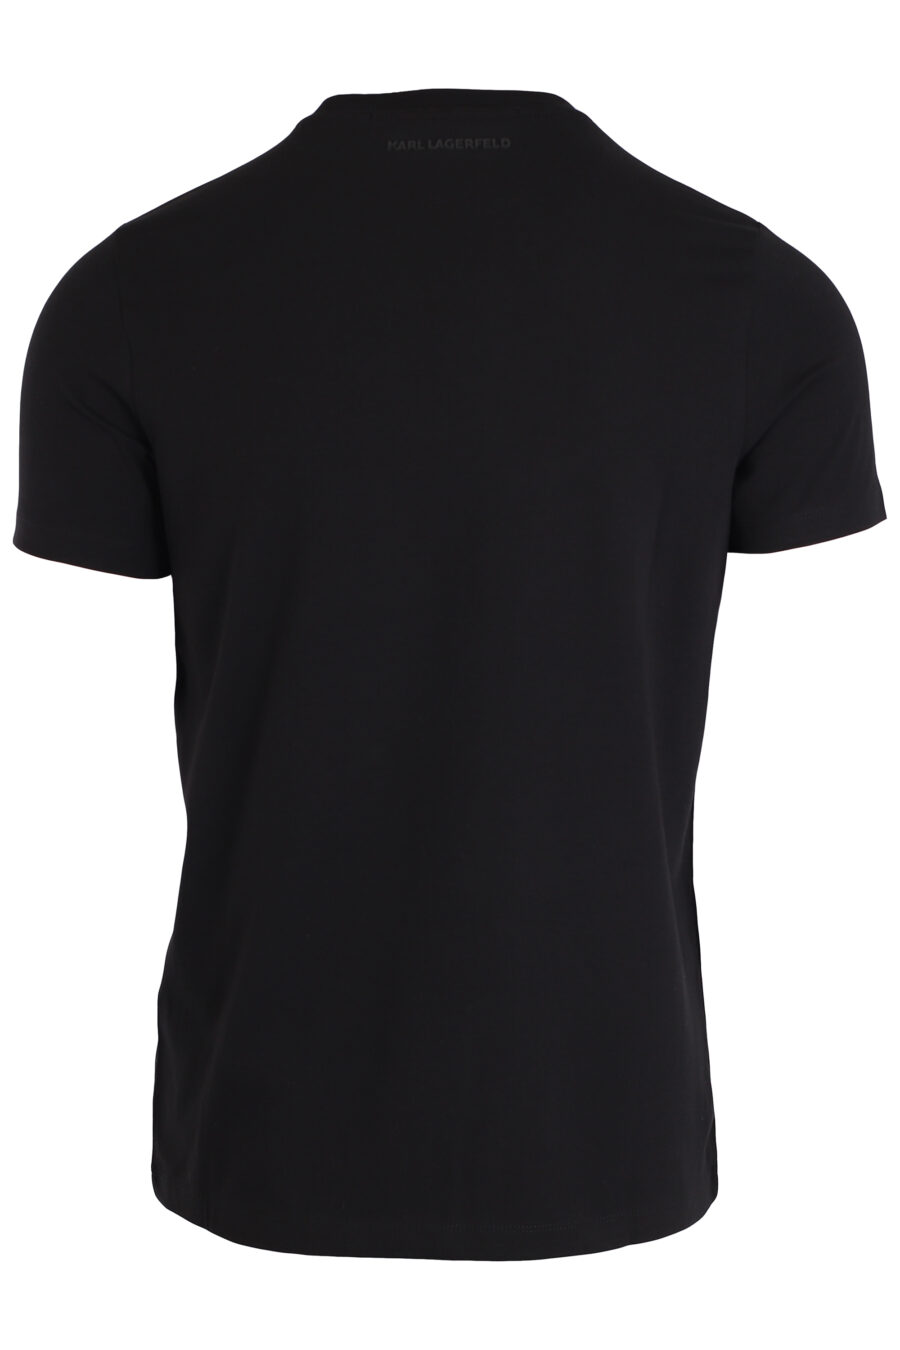 T-shirt preta com o logótipo "ikonik" - IMG 3977